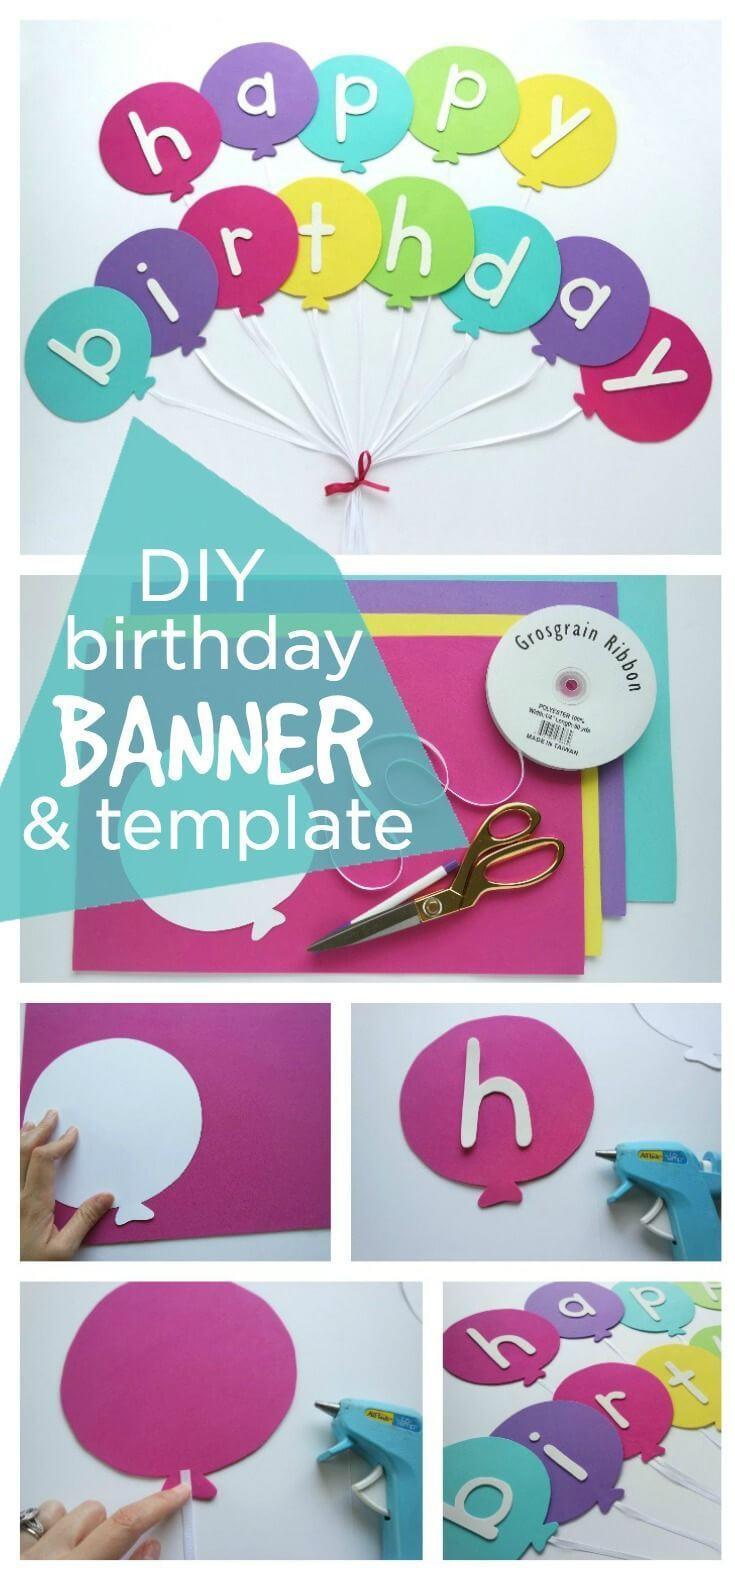 Happy Birthday Banner Diy Template | Birthday Banner Regarding Diy Birthday Banner Template